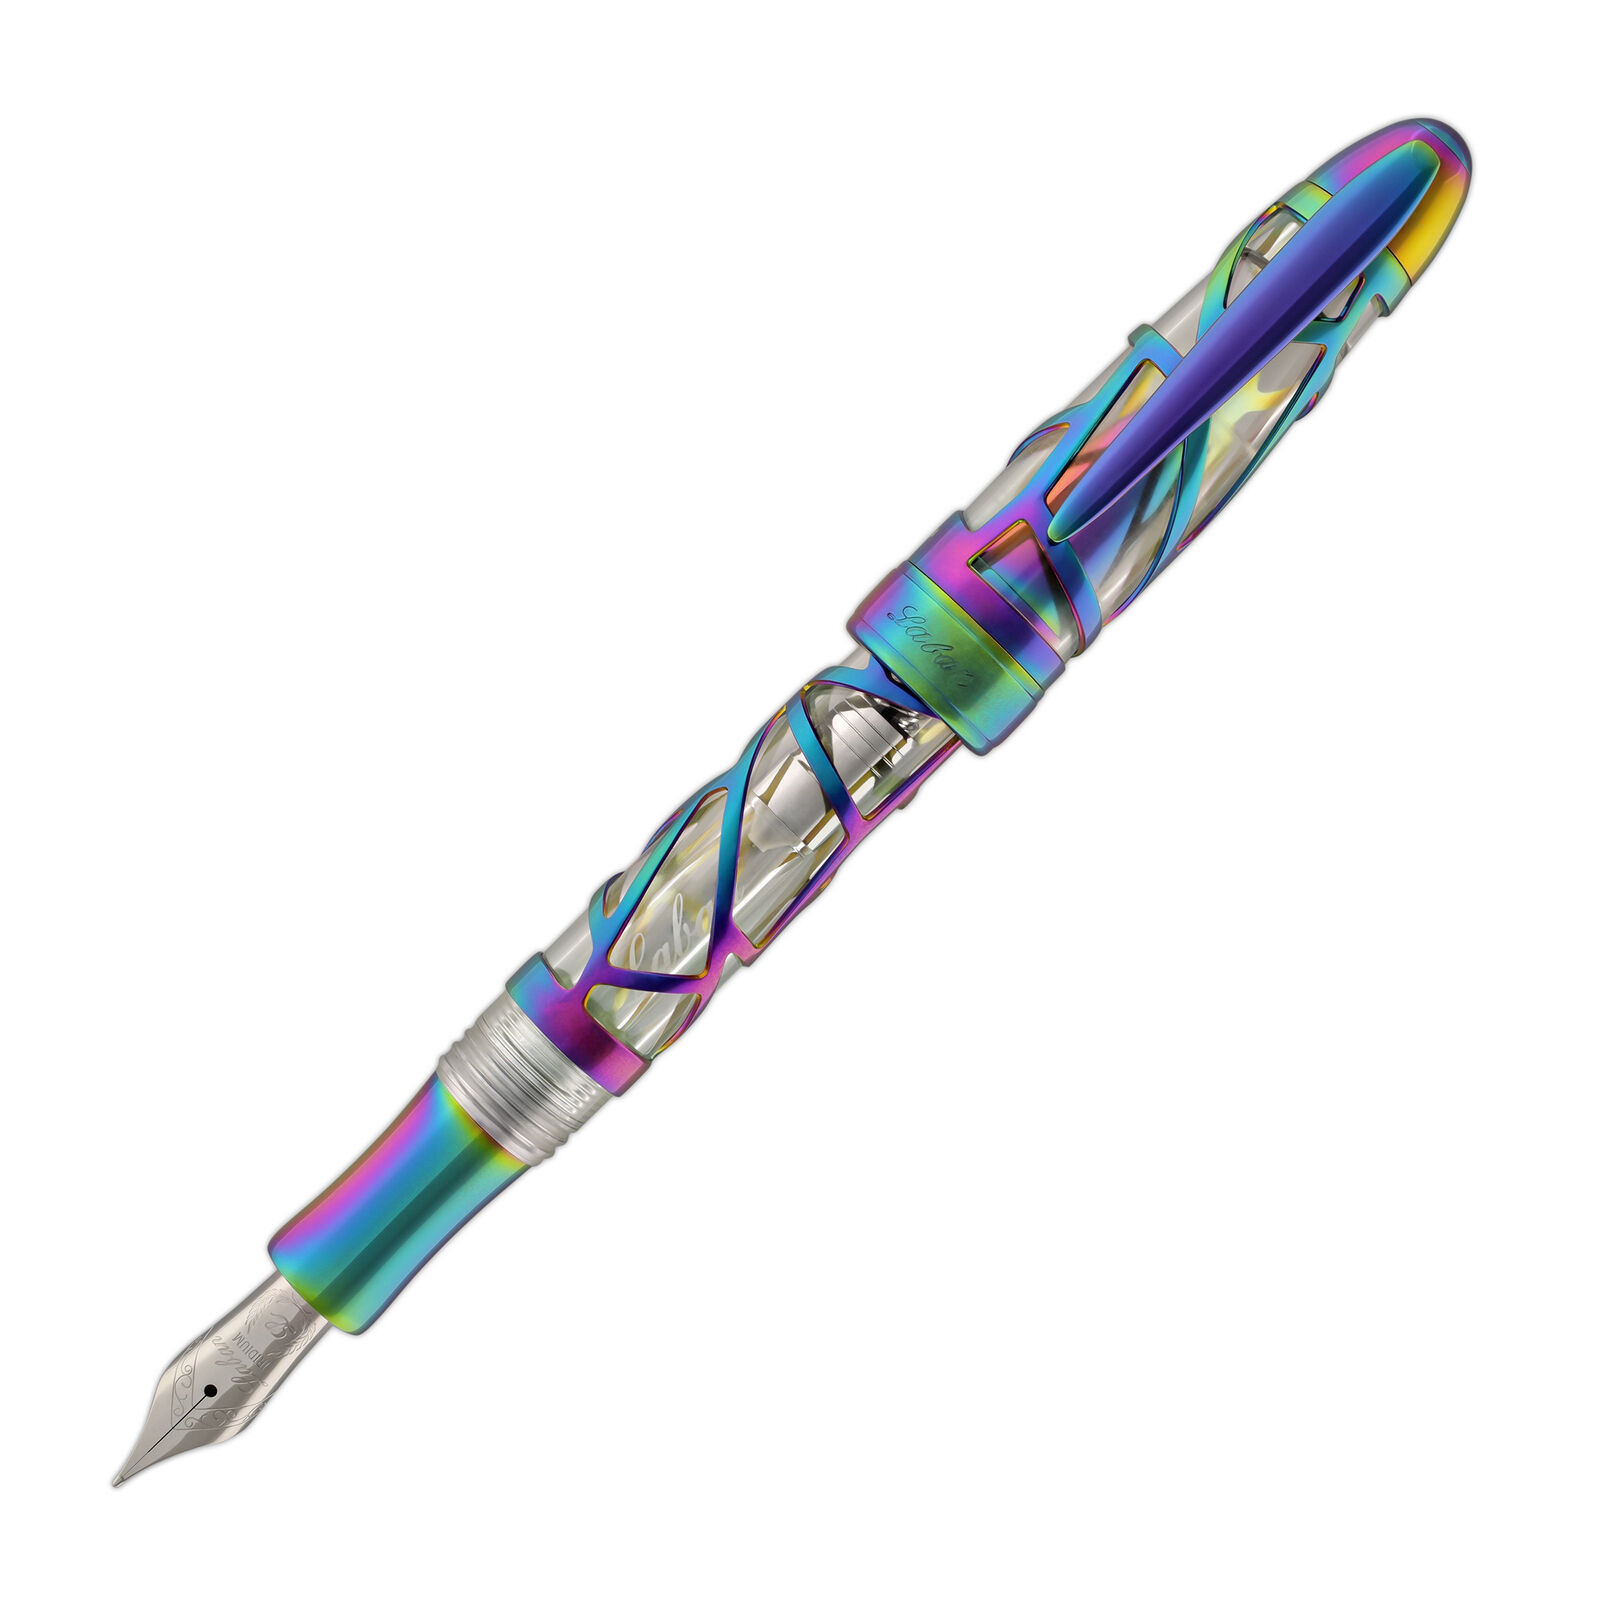 Laban 300 Skeleton Fountain Pen in Rainbow - Medium Point - NEW in Original Box